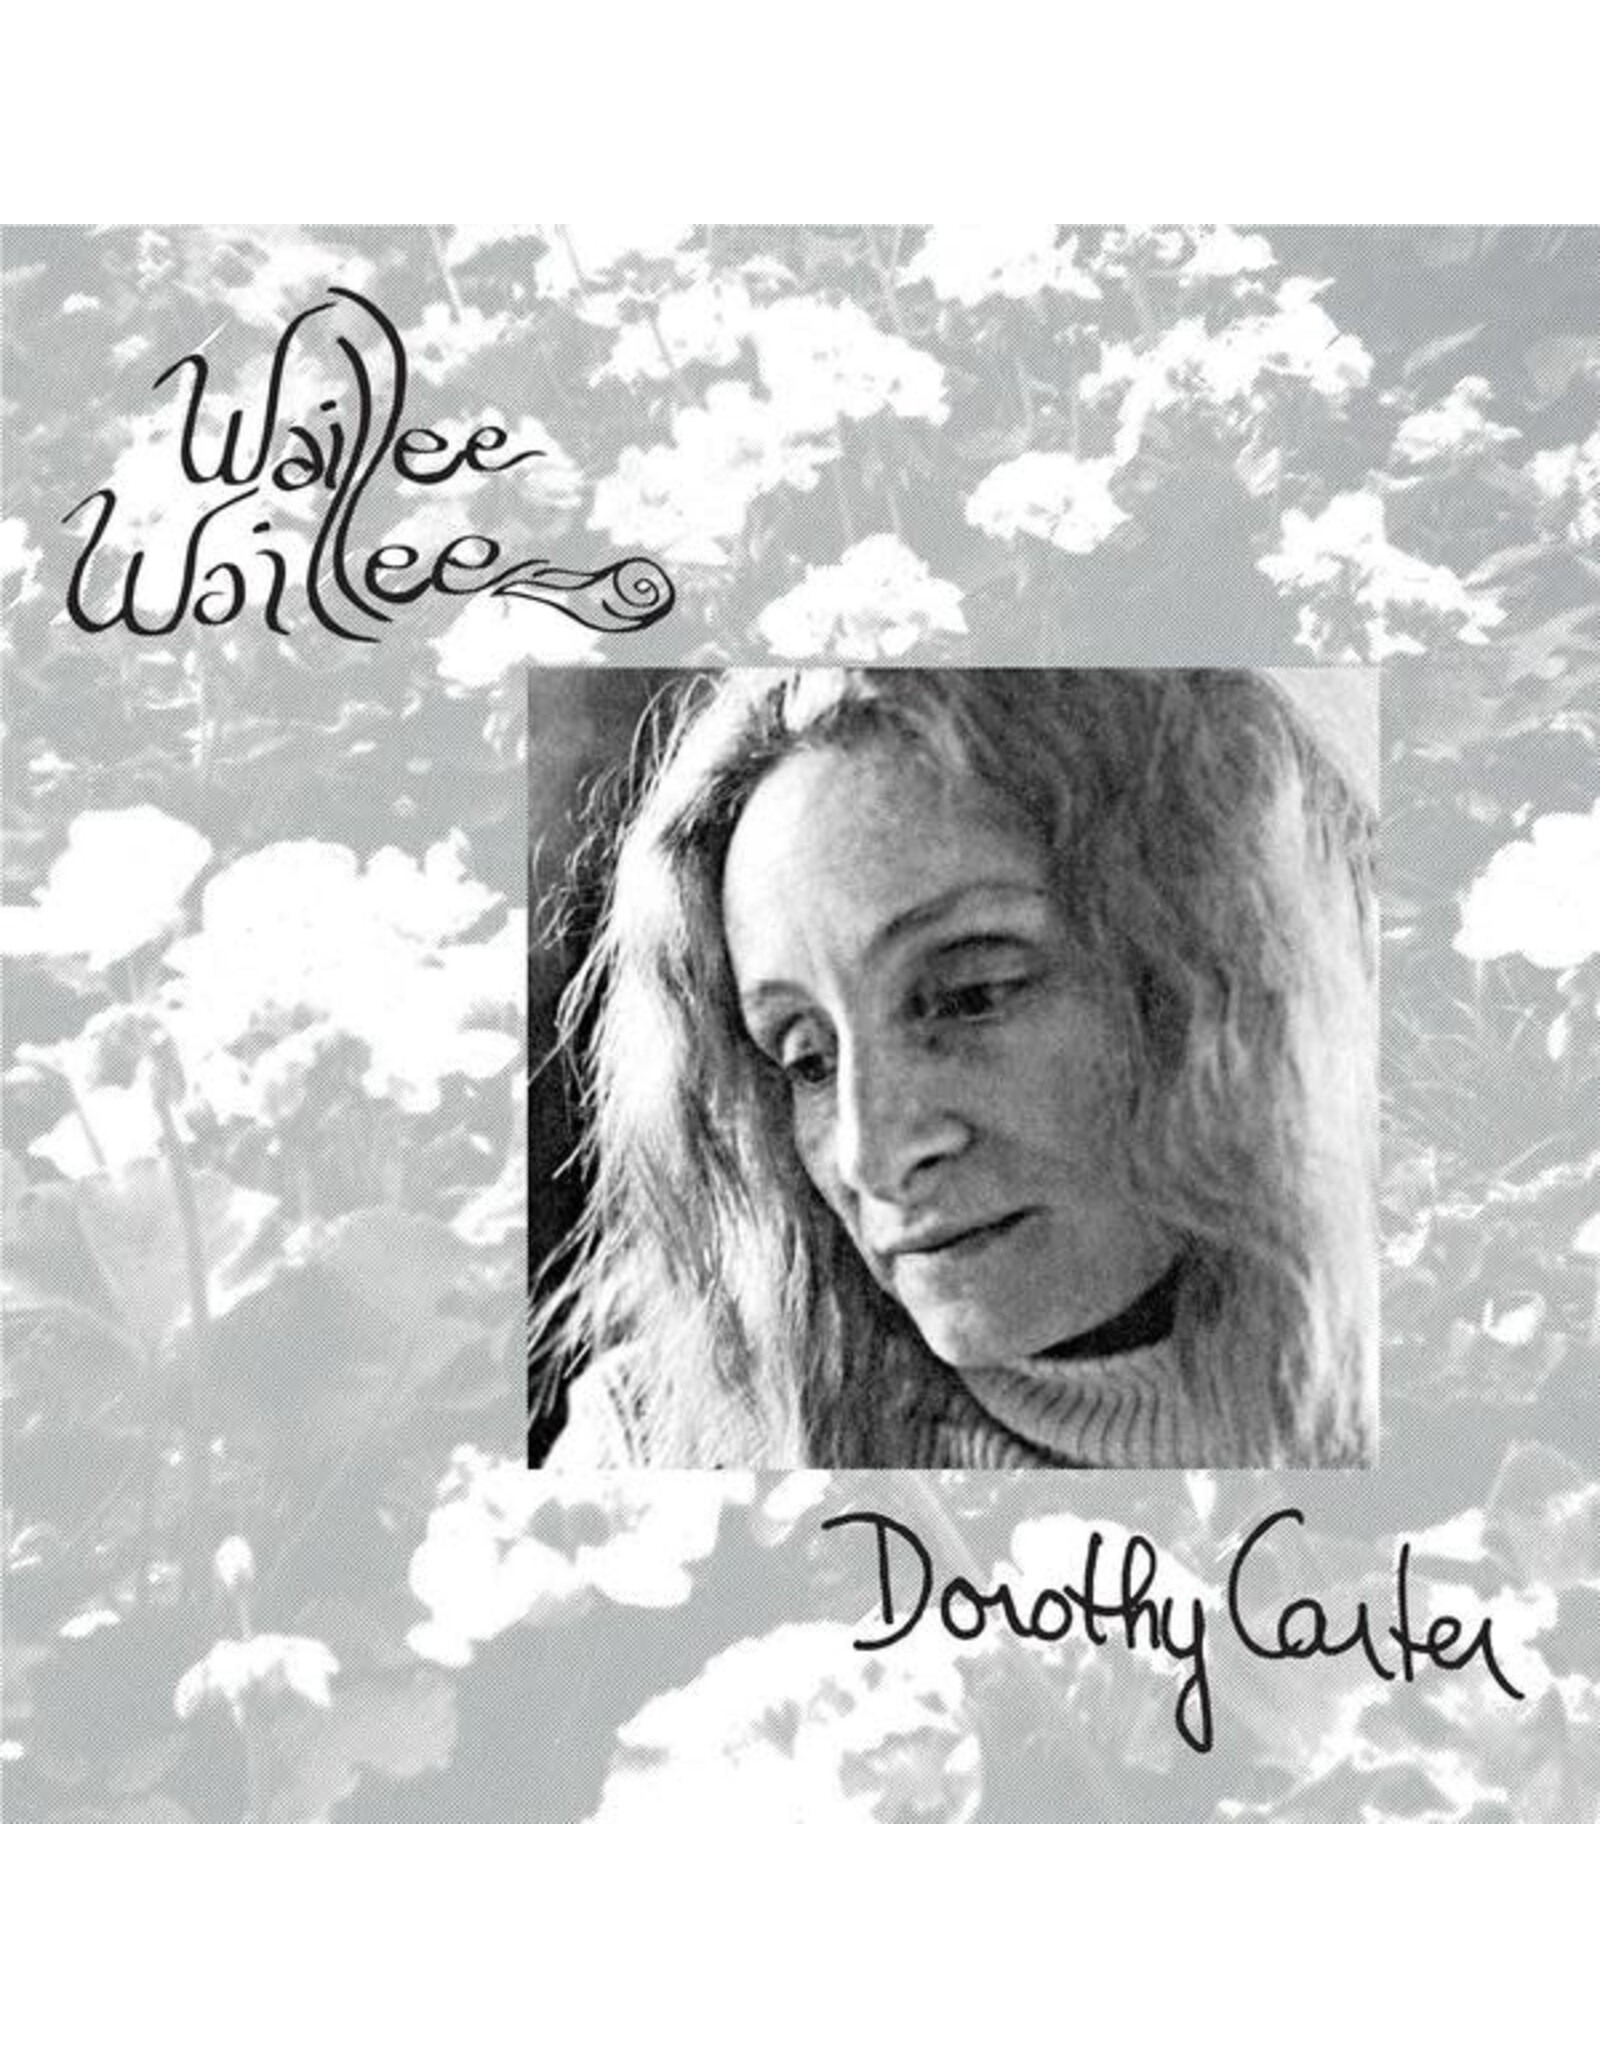 Palto Flats Carter, Dorothy: Waillee Waillee LP